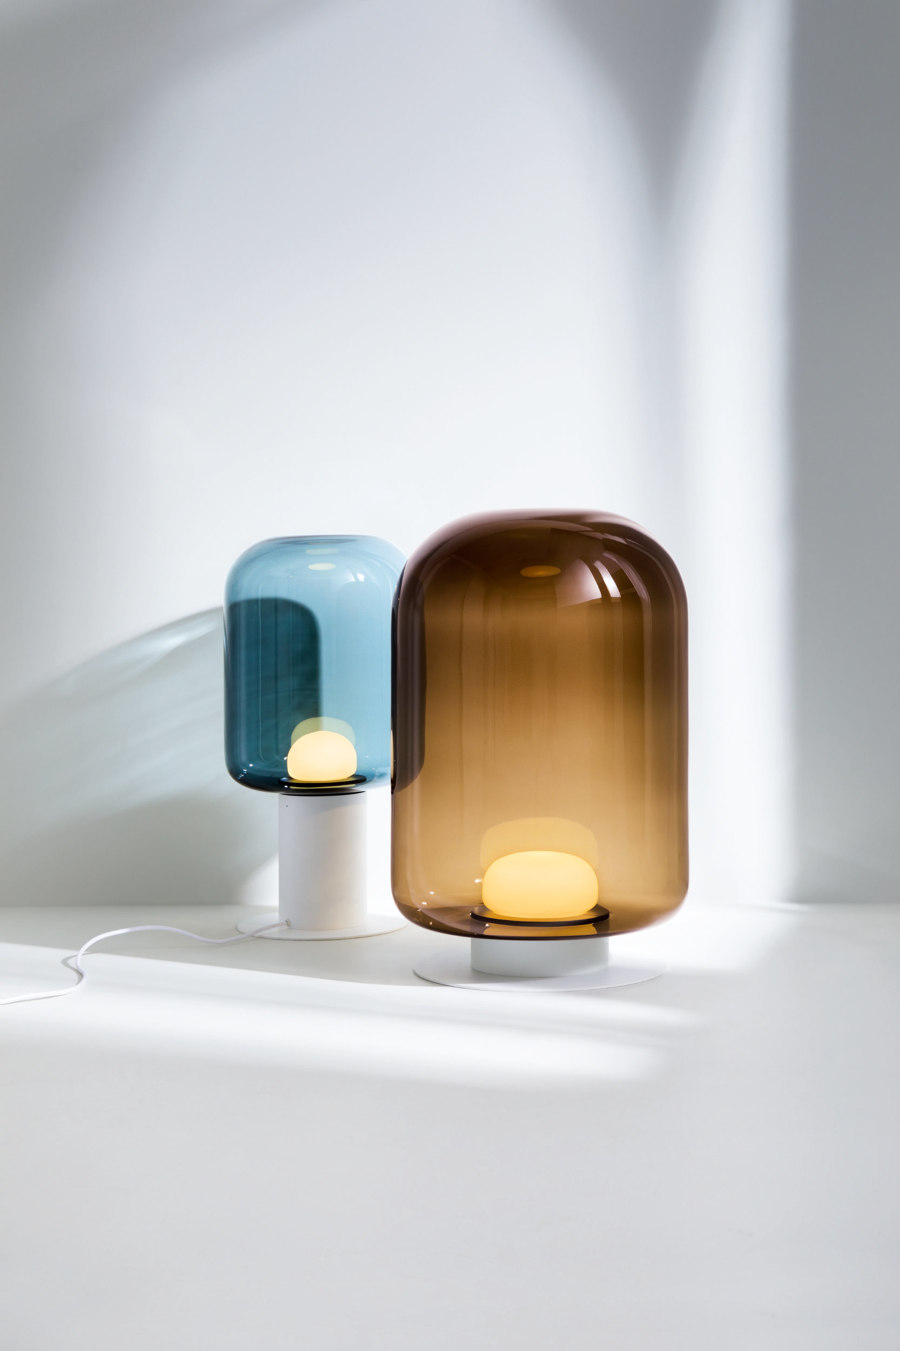 Illuminating design with Labra | News